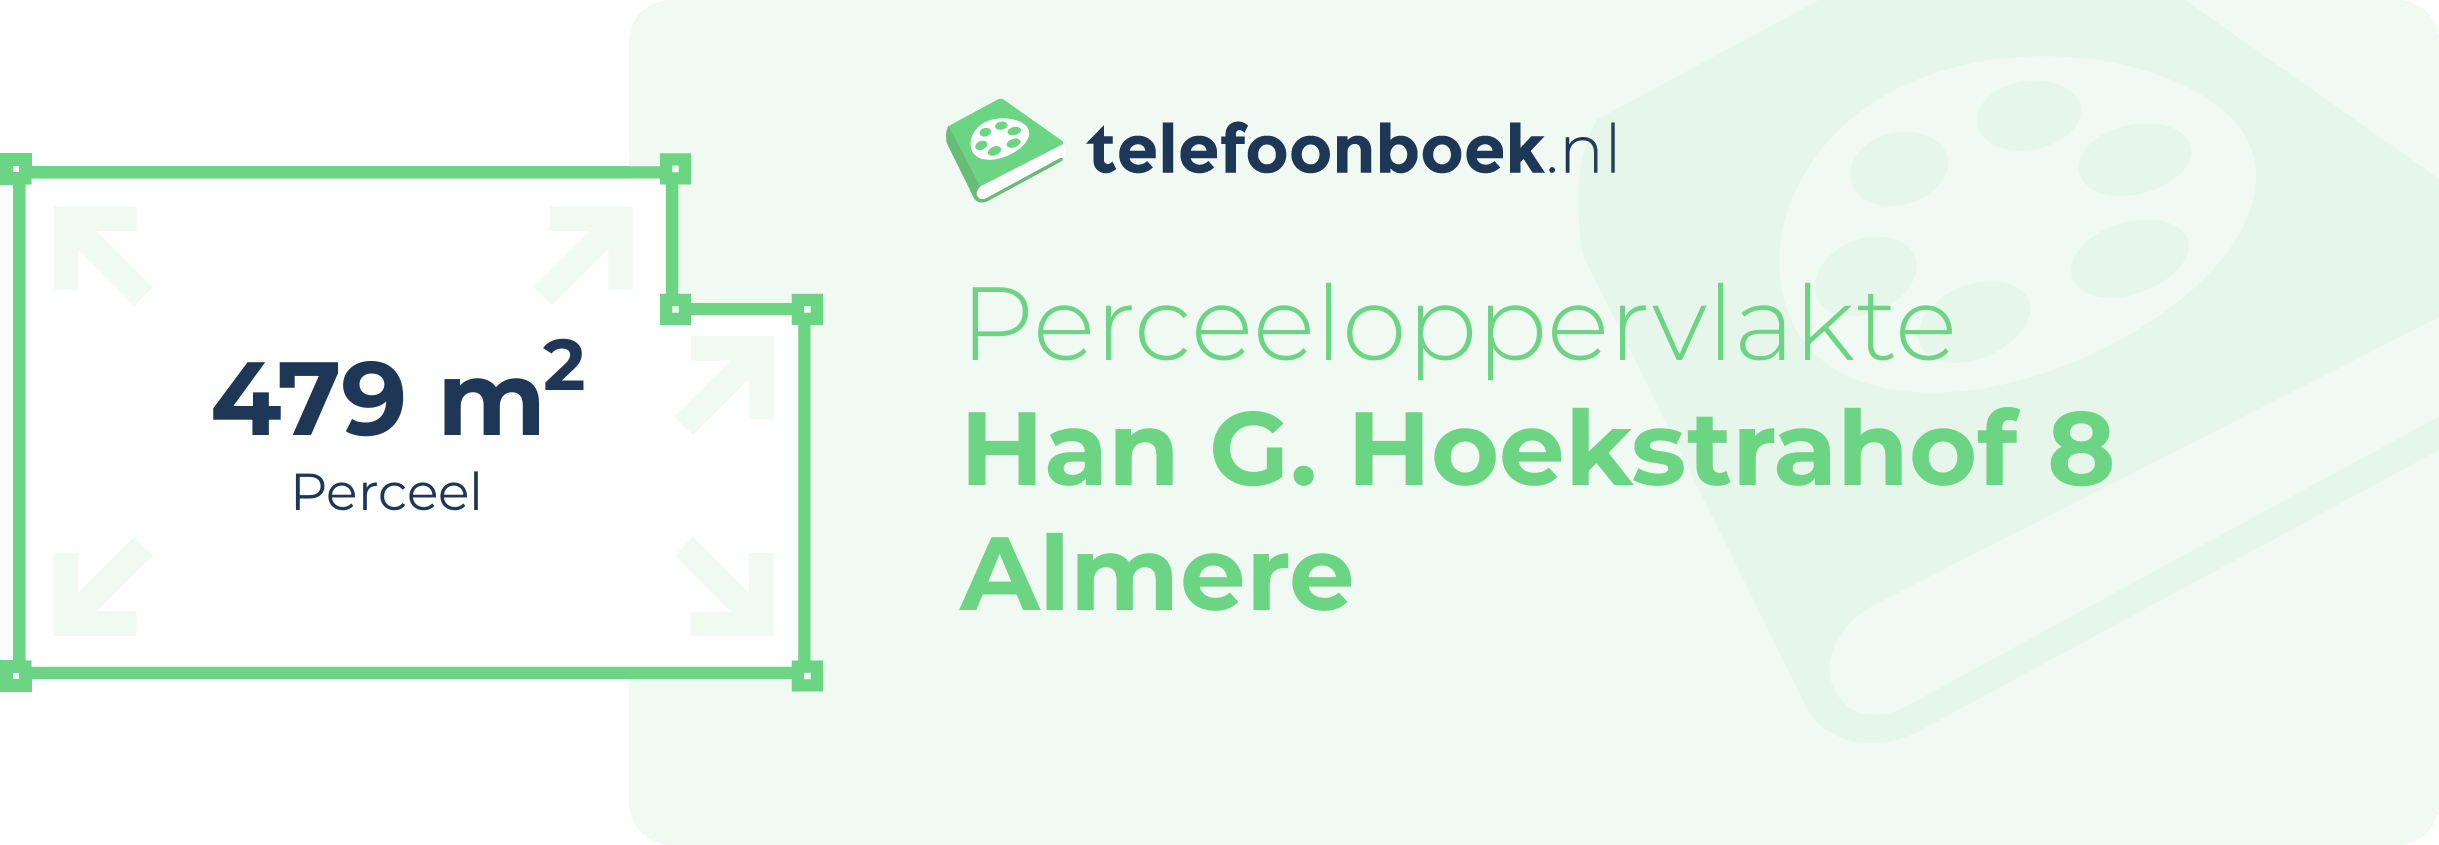 Perceeloppervlakte Han G. Hoekstrahof 8 Almere